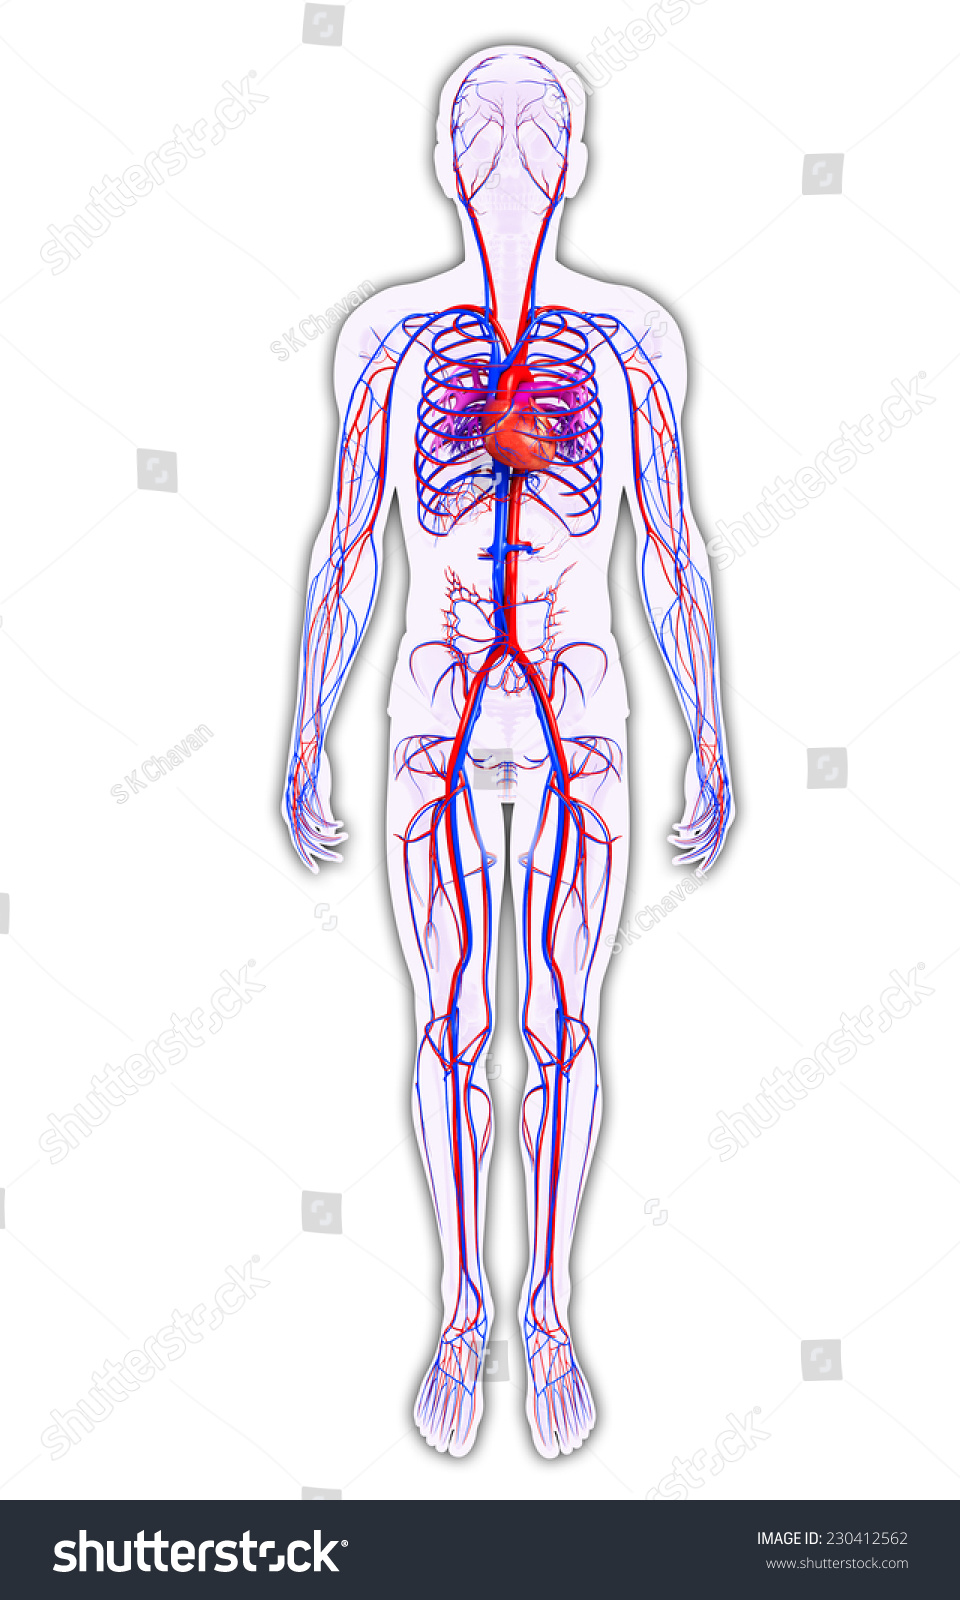 Illustration Of Male Circulatory System - 230412562 : Shutterstock